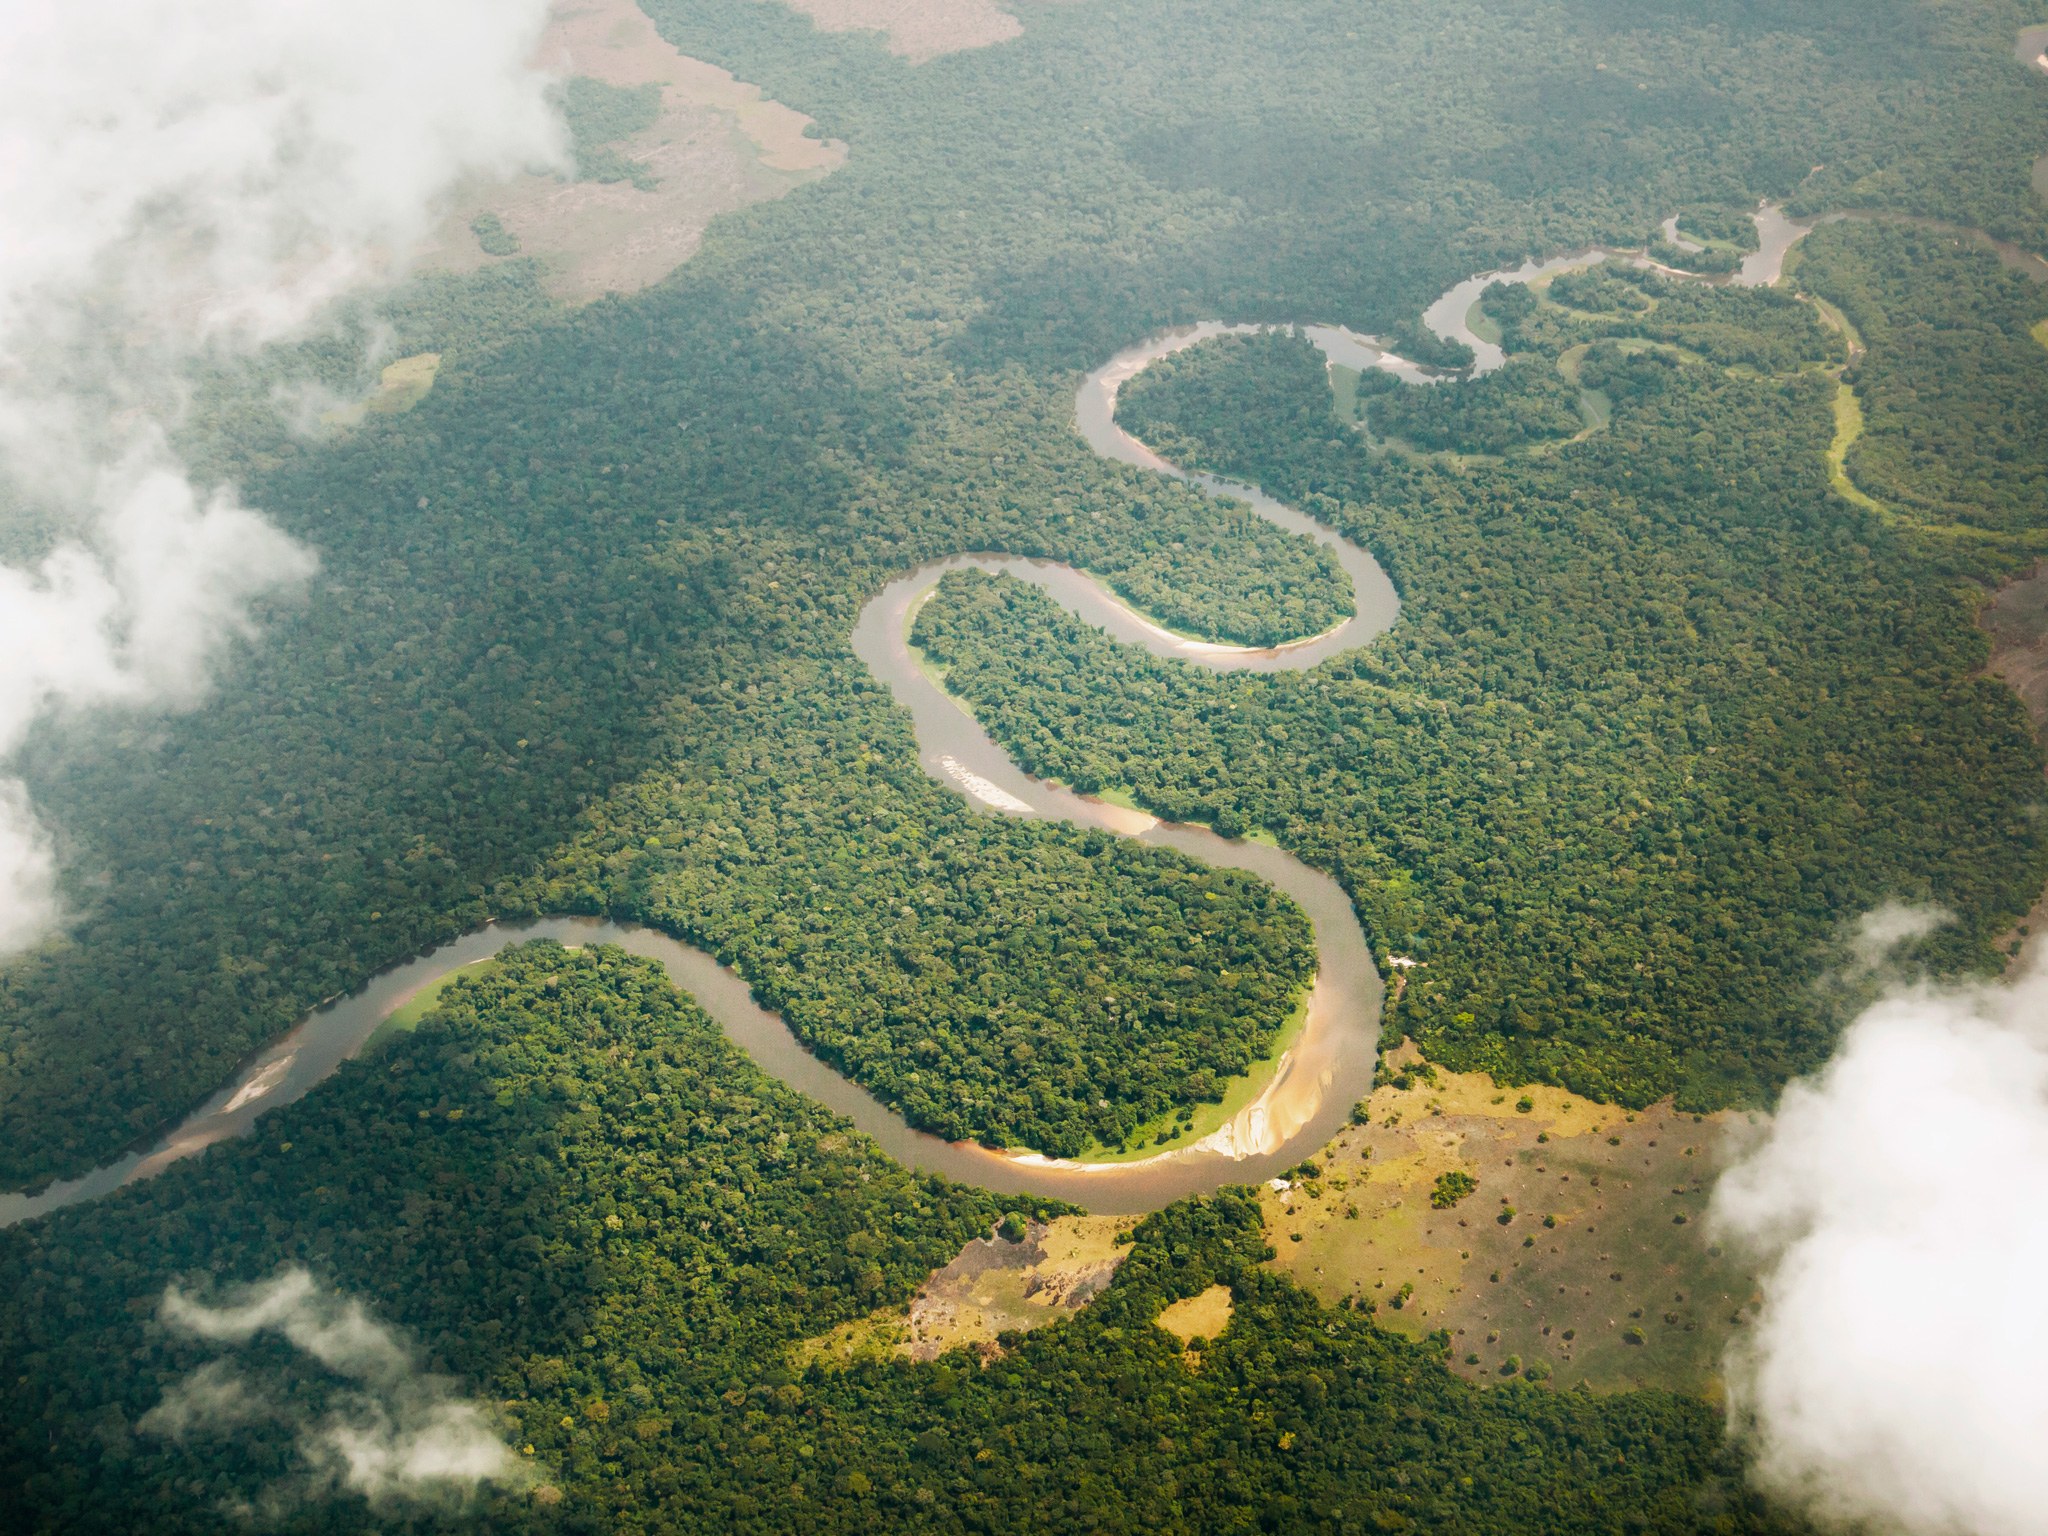 The Congo River flowing through dense tropical rainforest.